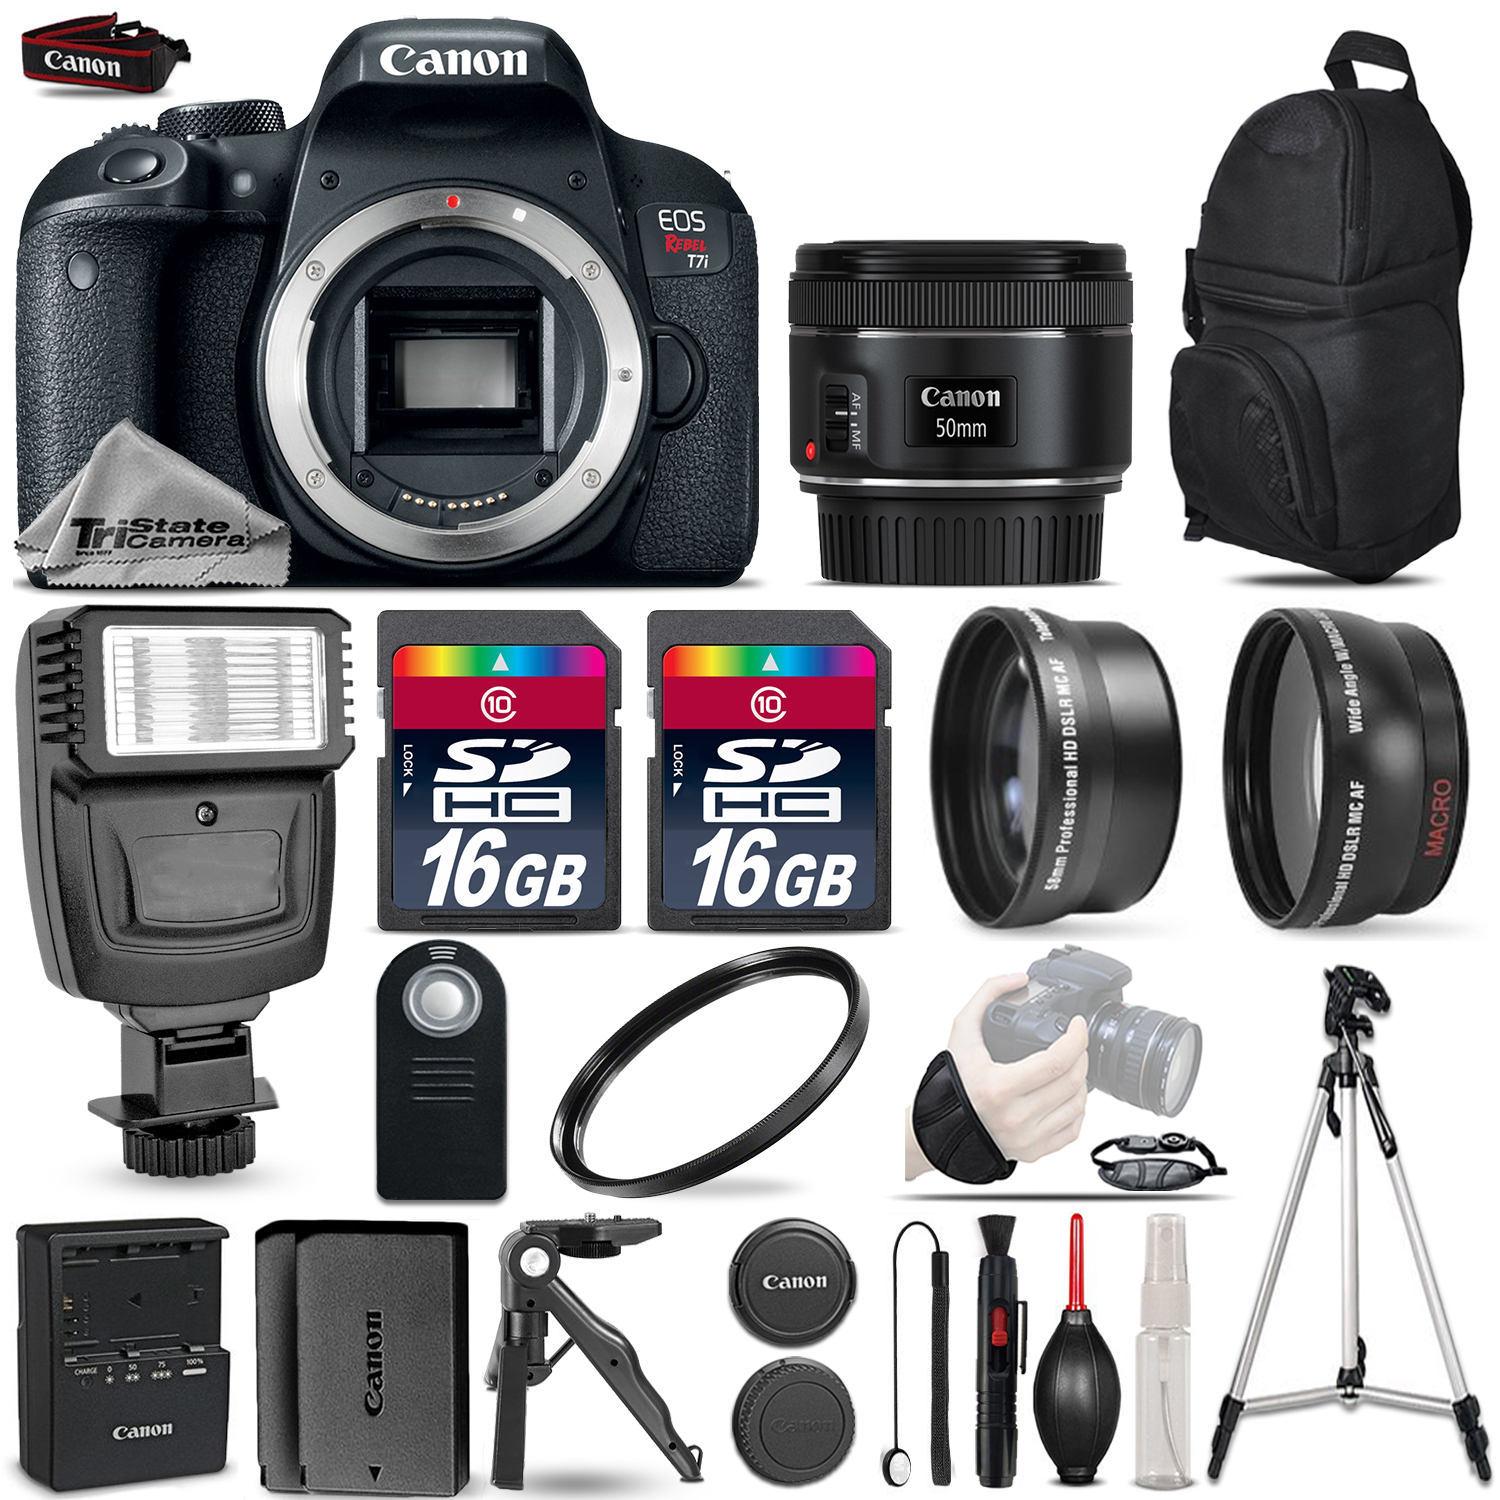 EOS Rebel T7i Camera 800D + 50mm 1.8 -3 Lens Kit + Flash+ 32GB + EXT BATT *FREE SHIPPING*